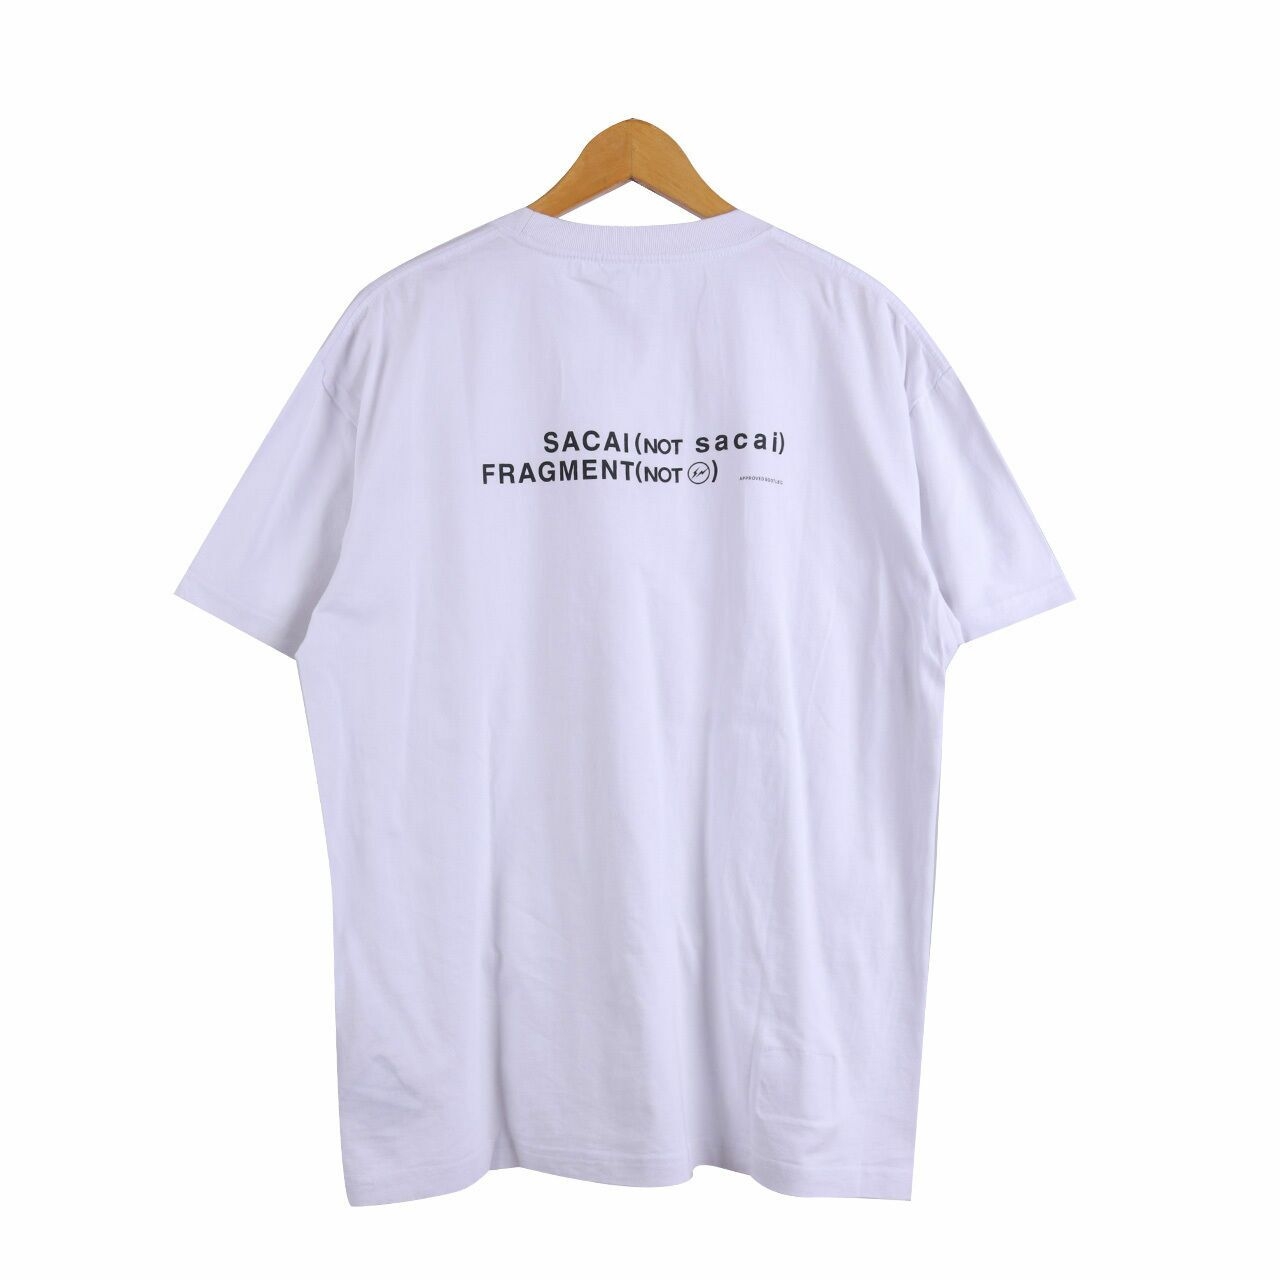 sacai White Fragment Design T-Shirt